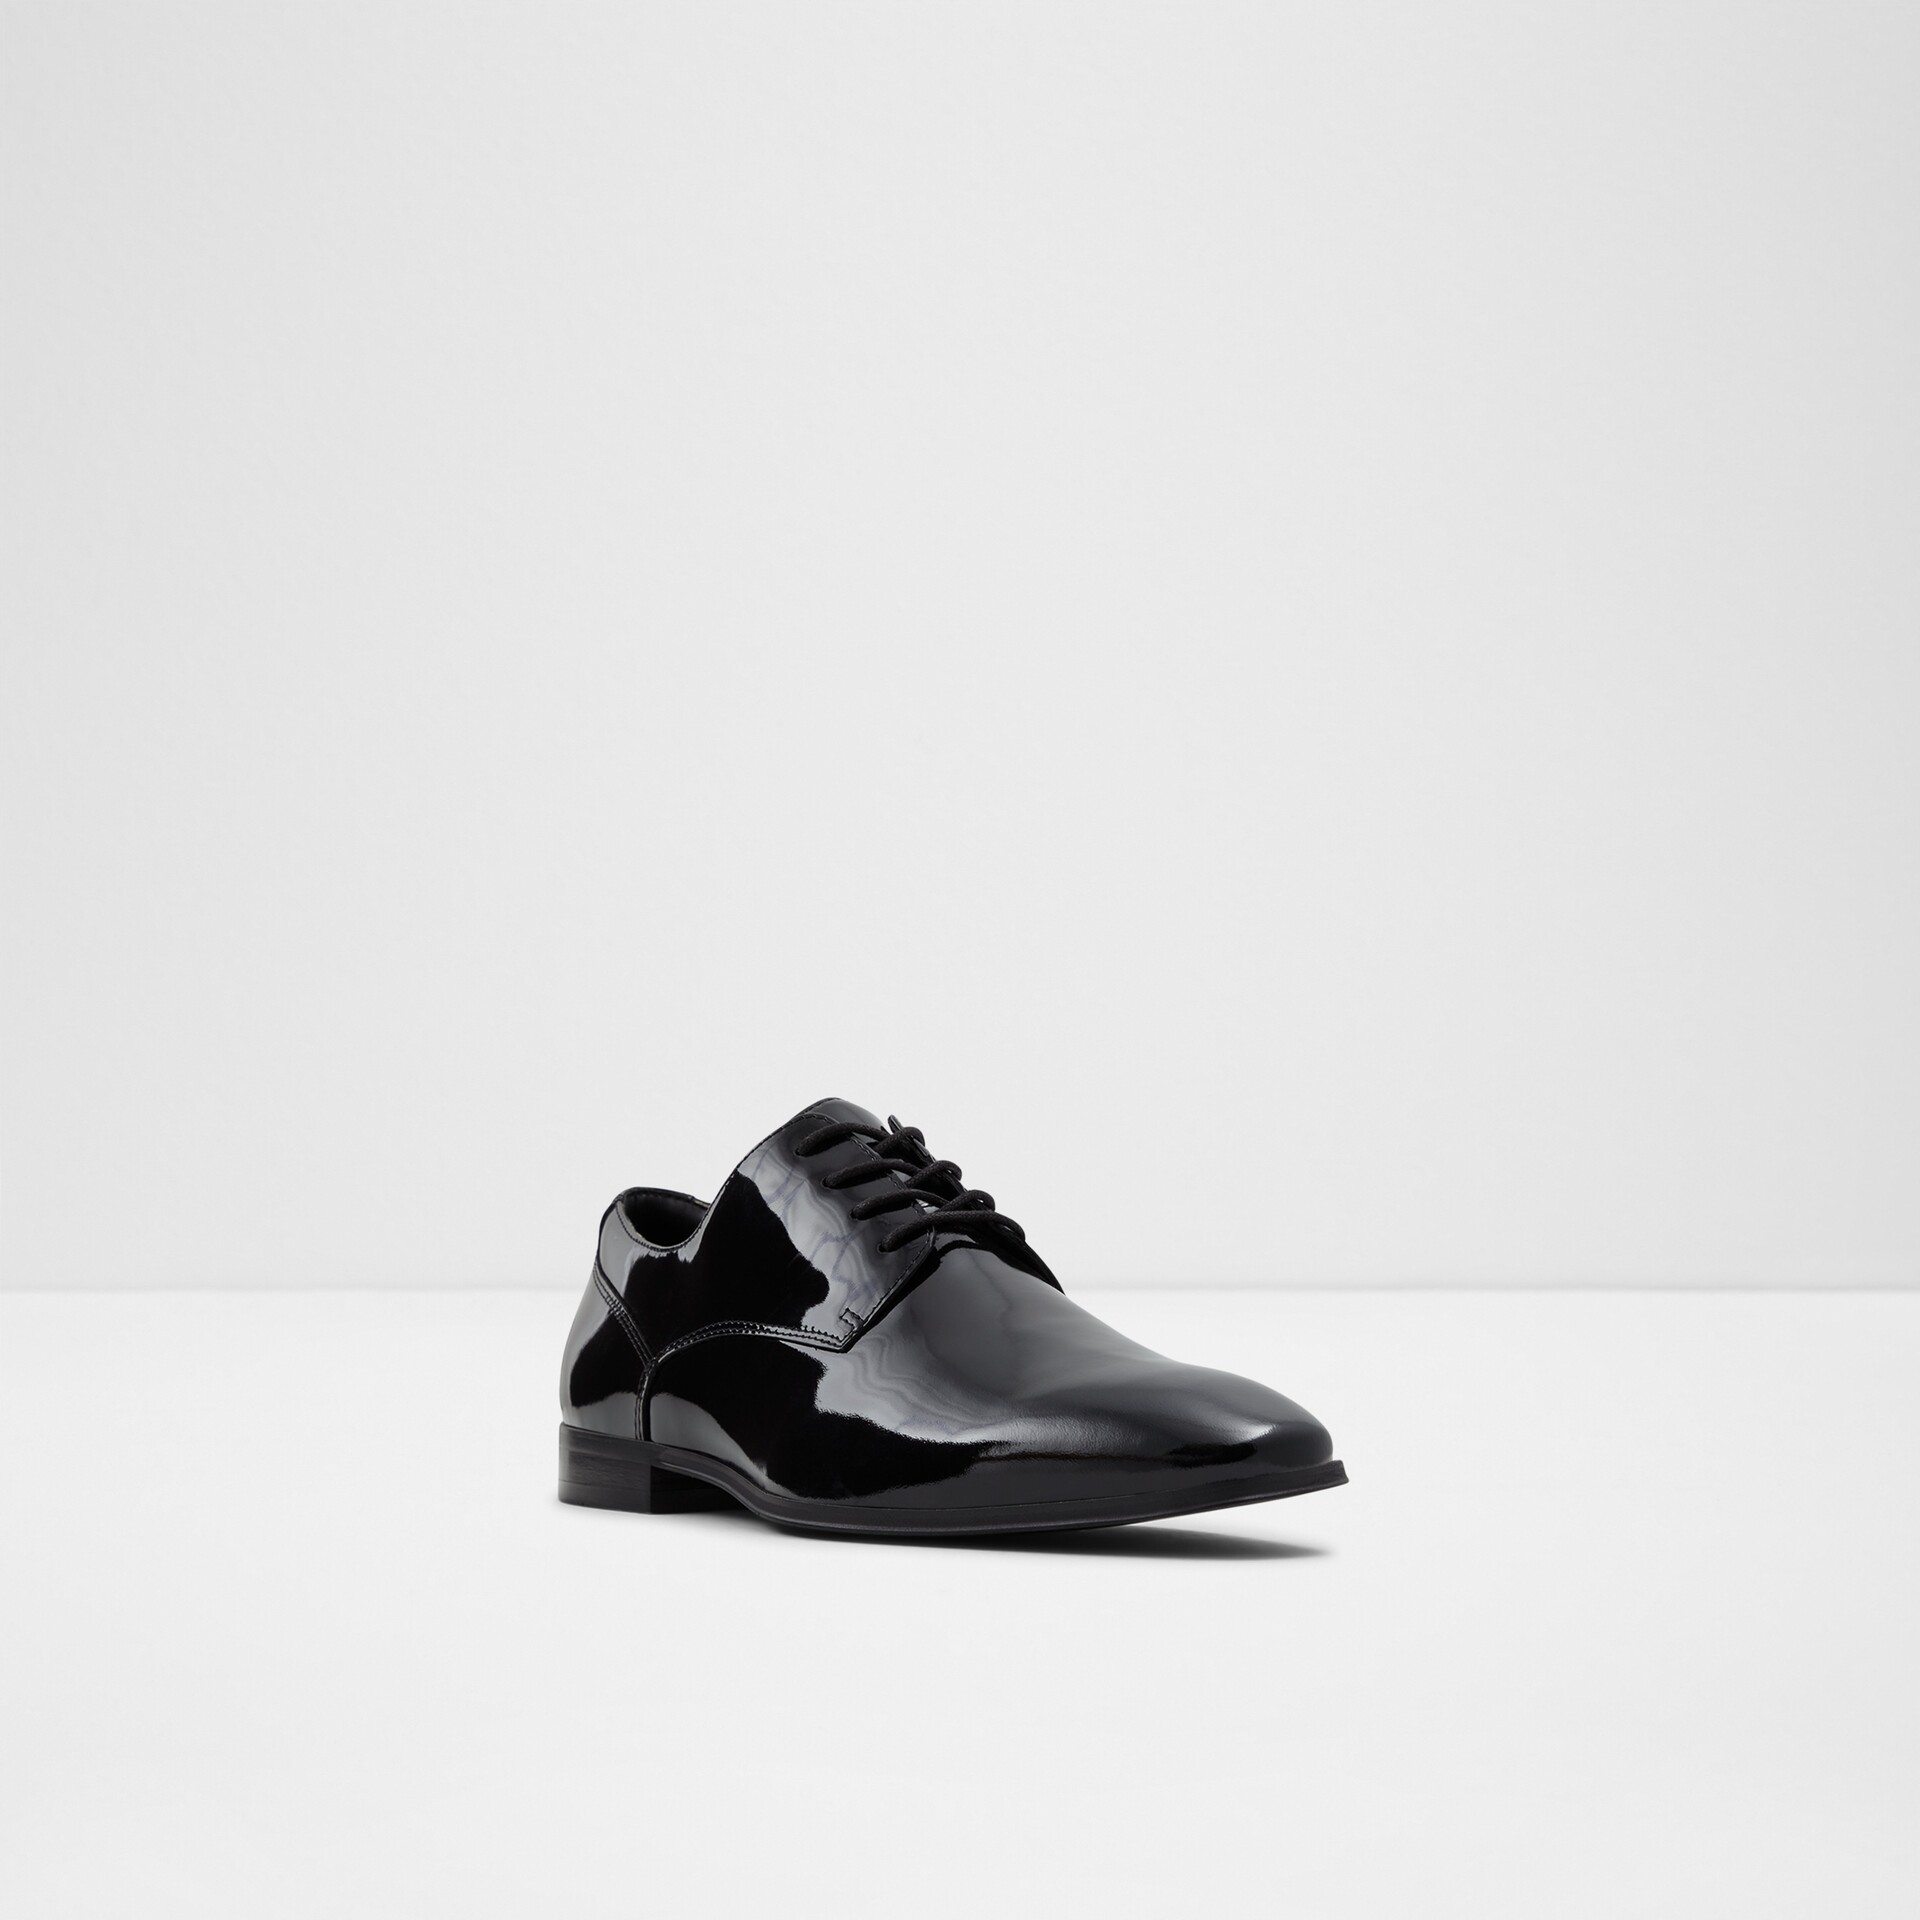 Interminable aislamiento charla Zapatos de vestir para hombre en piel en barniz negro NOVVIO 001001033 |  ALDO Shoes España